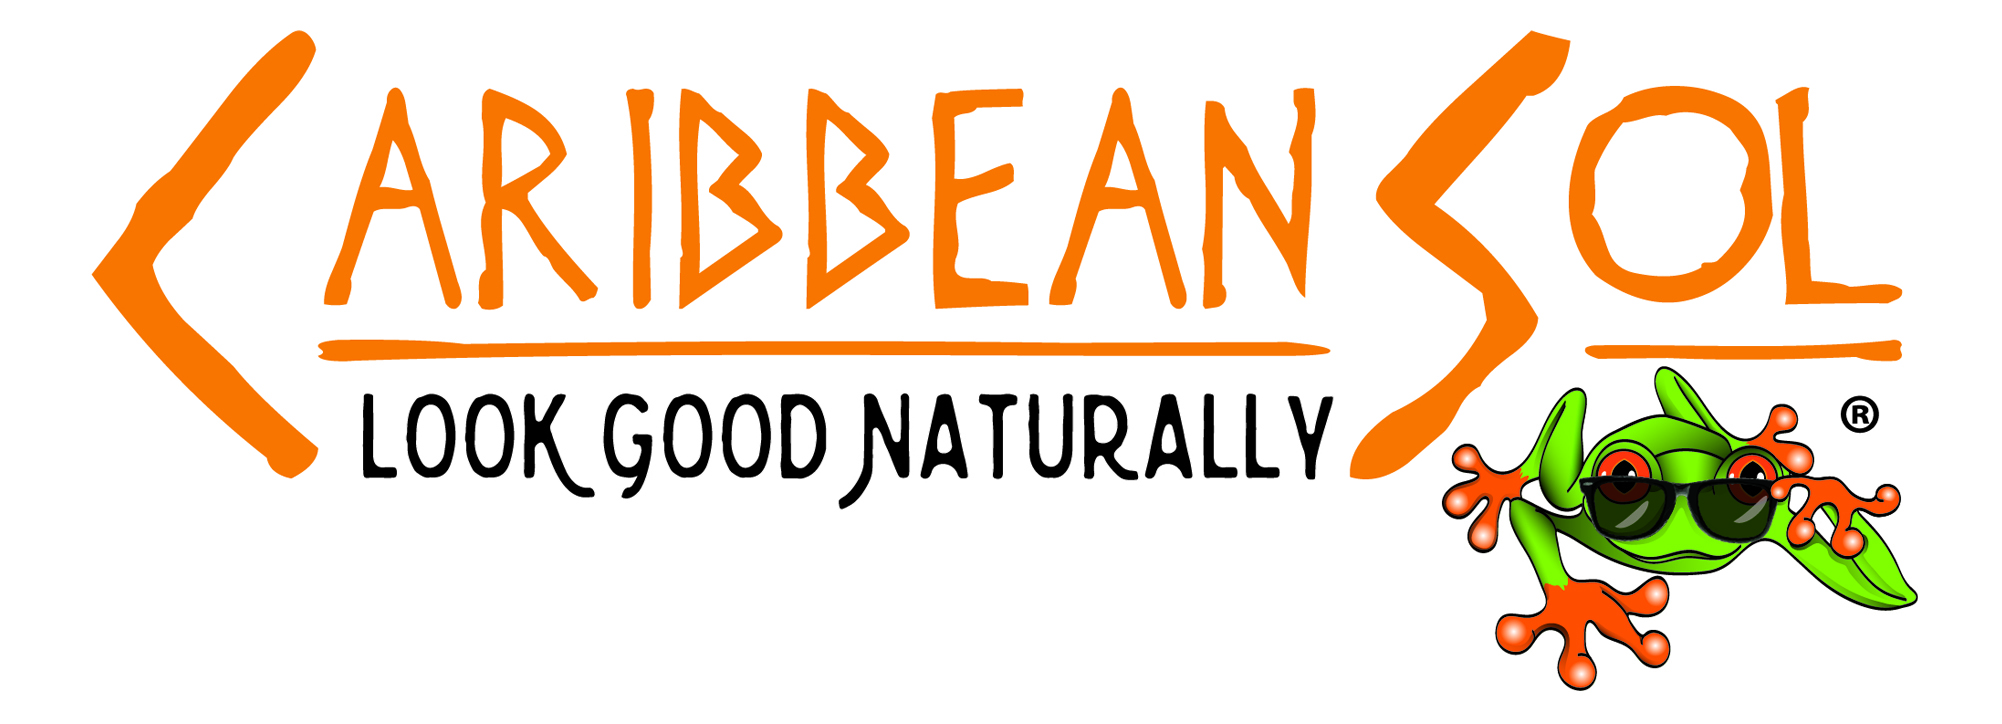 Caribbean Sol logo